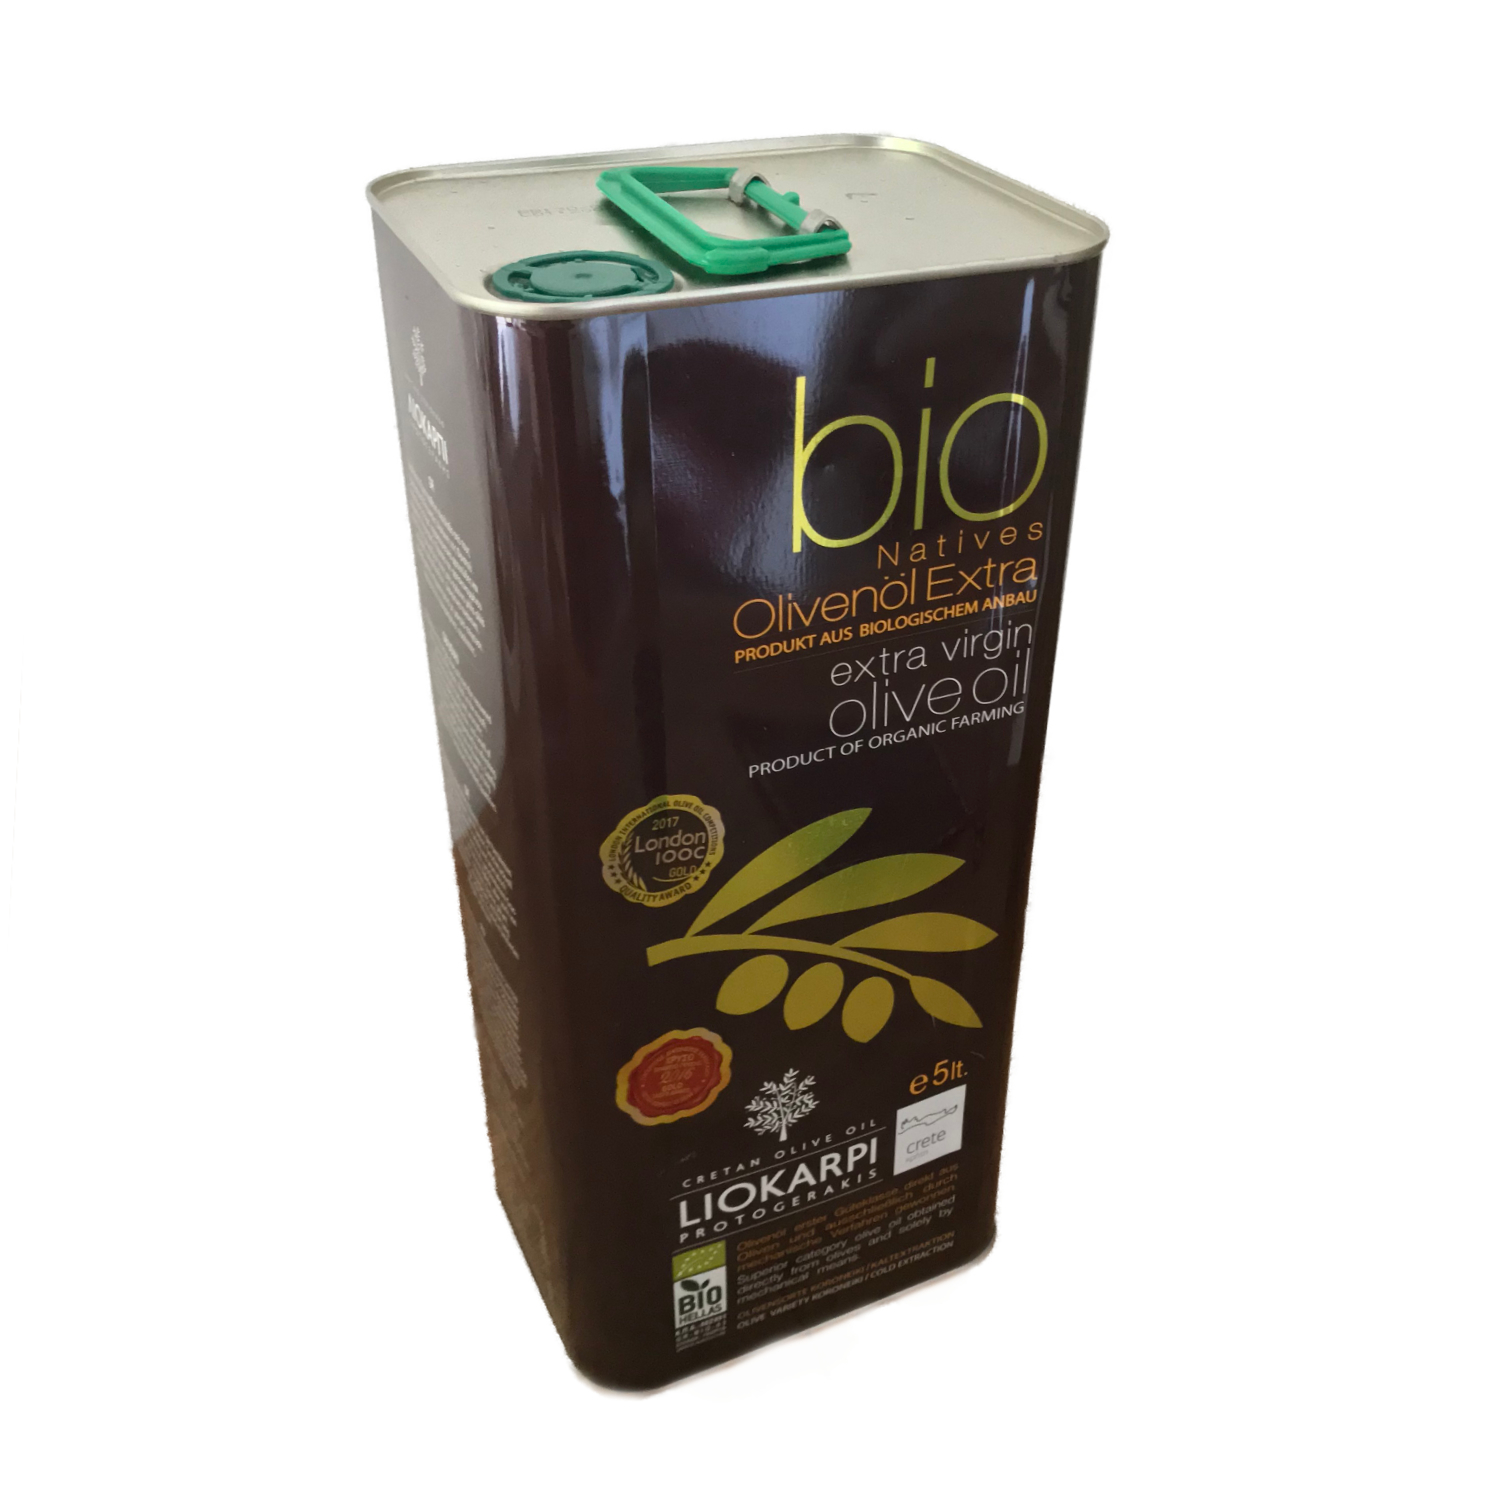 Liokarpi・Kretisches Olivenöl・5000 ml Kanister